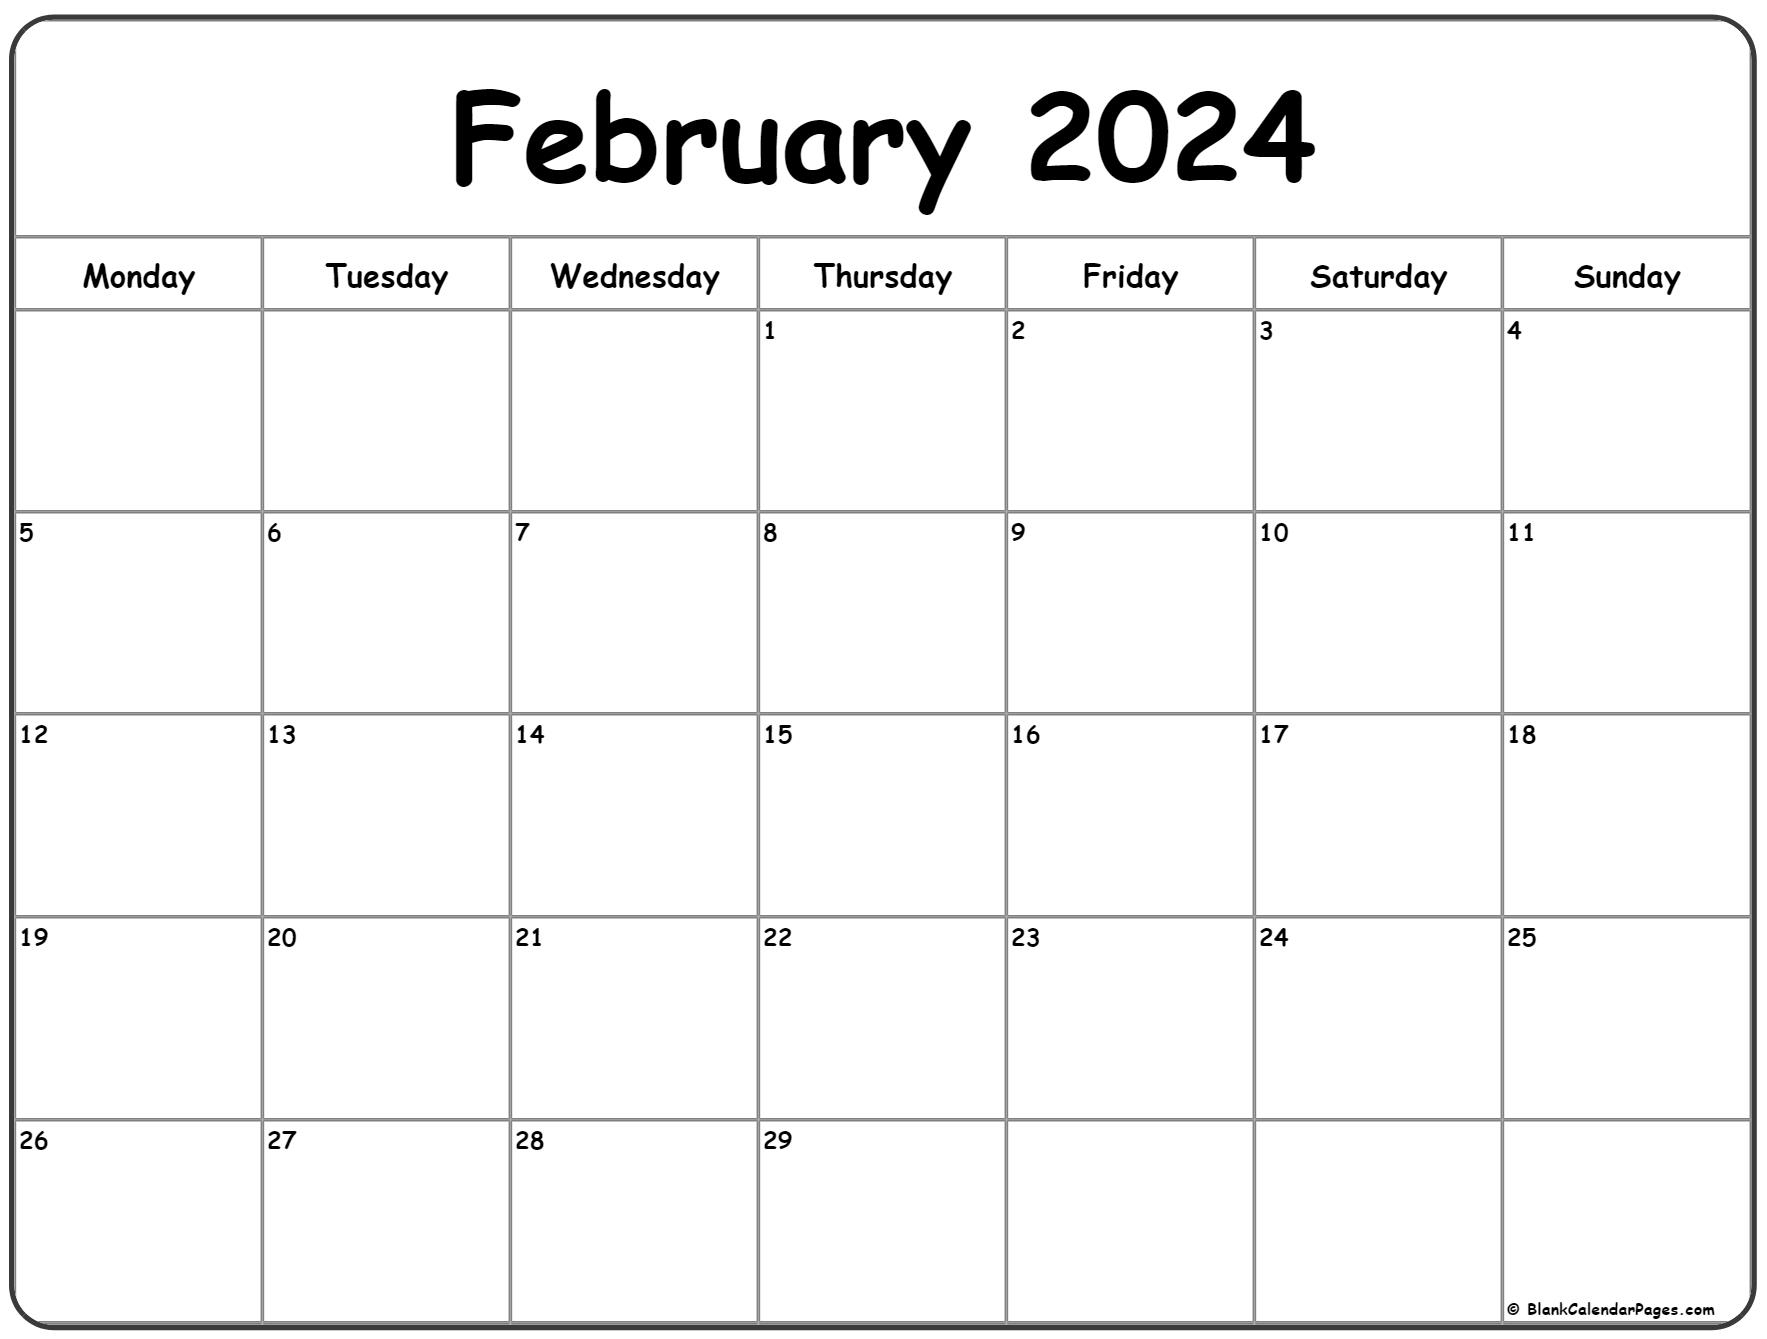 February 2024 Monday Calendar | Monday To Sunday for Blank Calendar Template February 2024 Printable